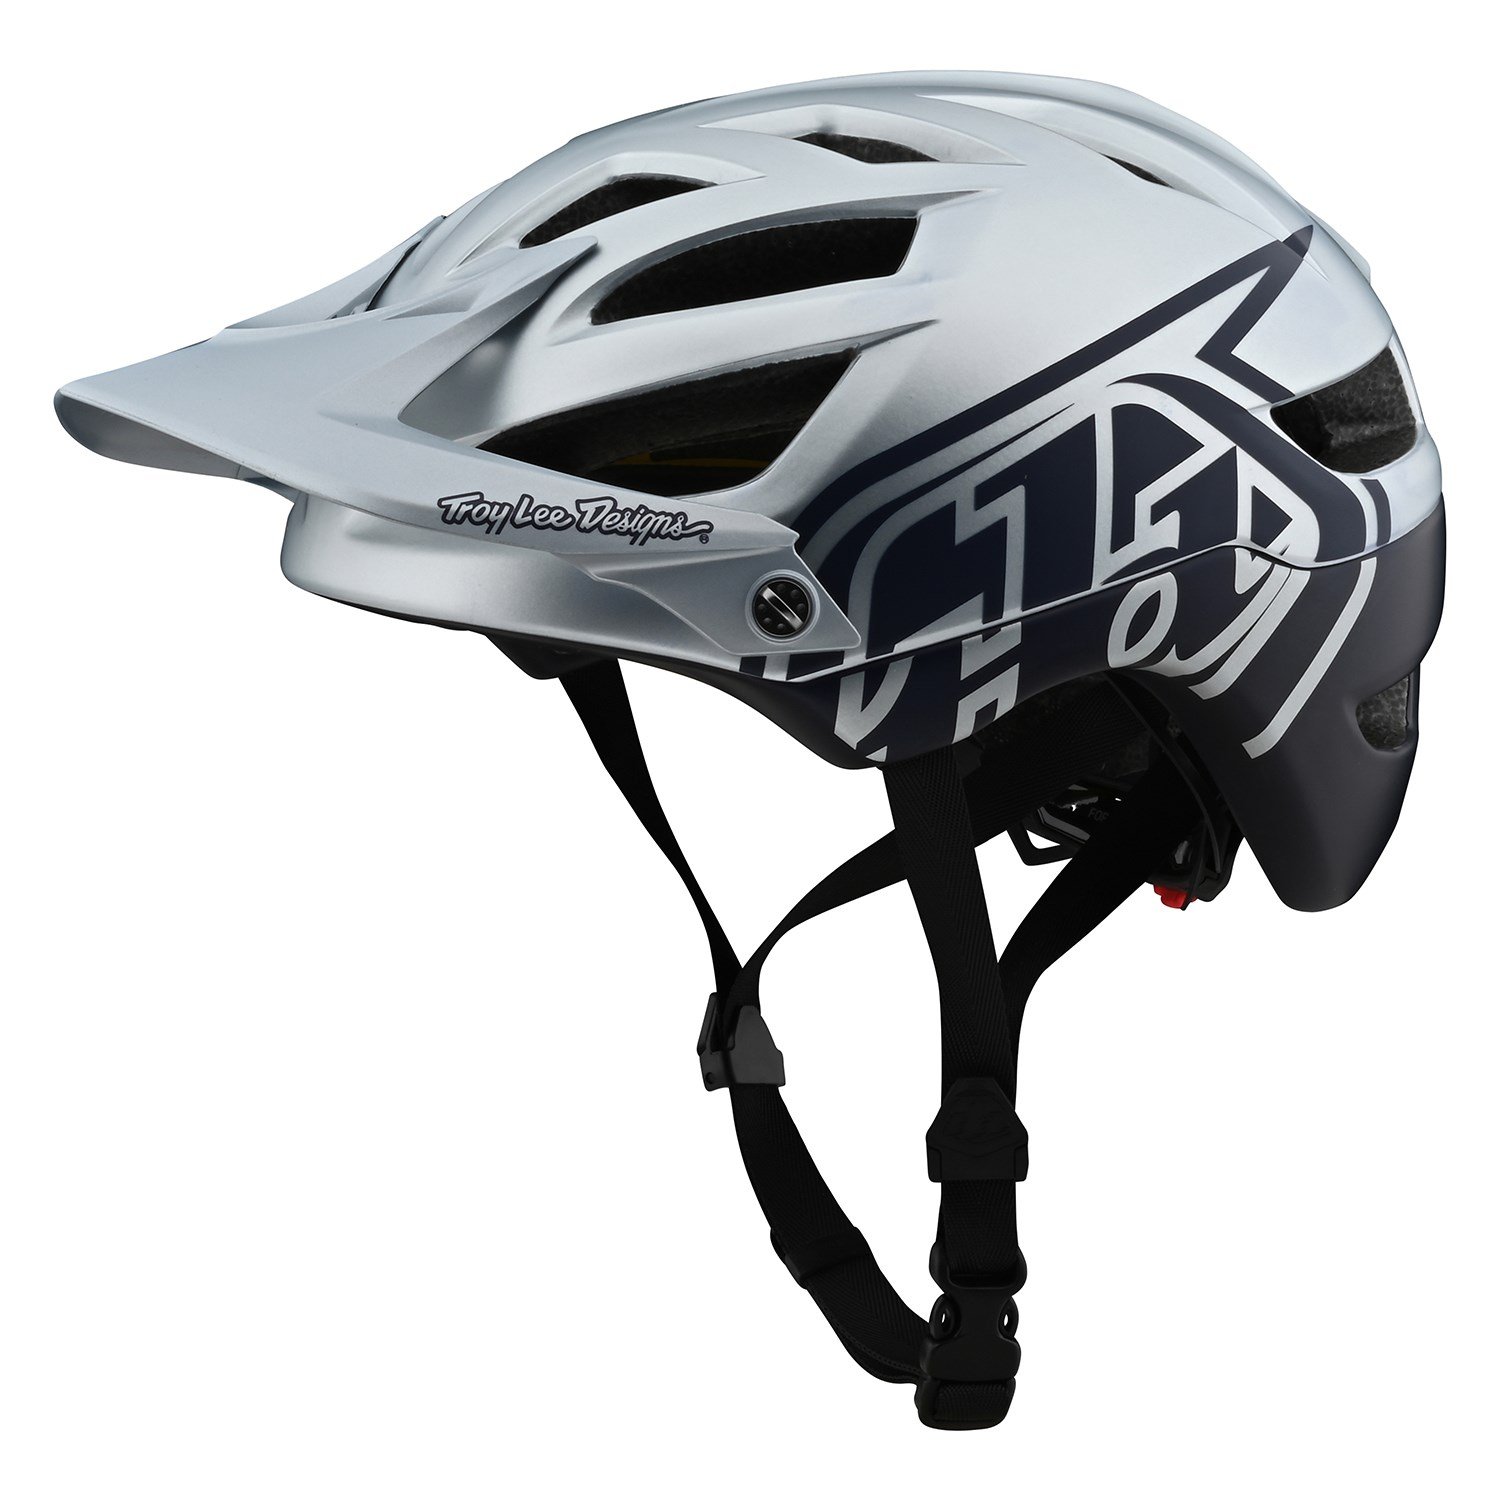 troy lee designs mountain bike helmet